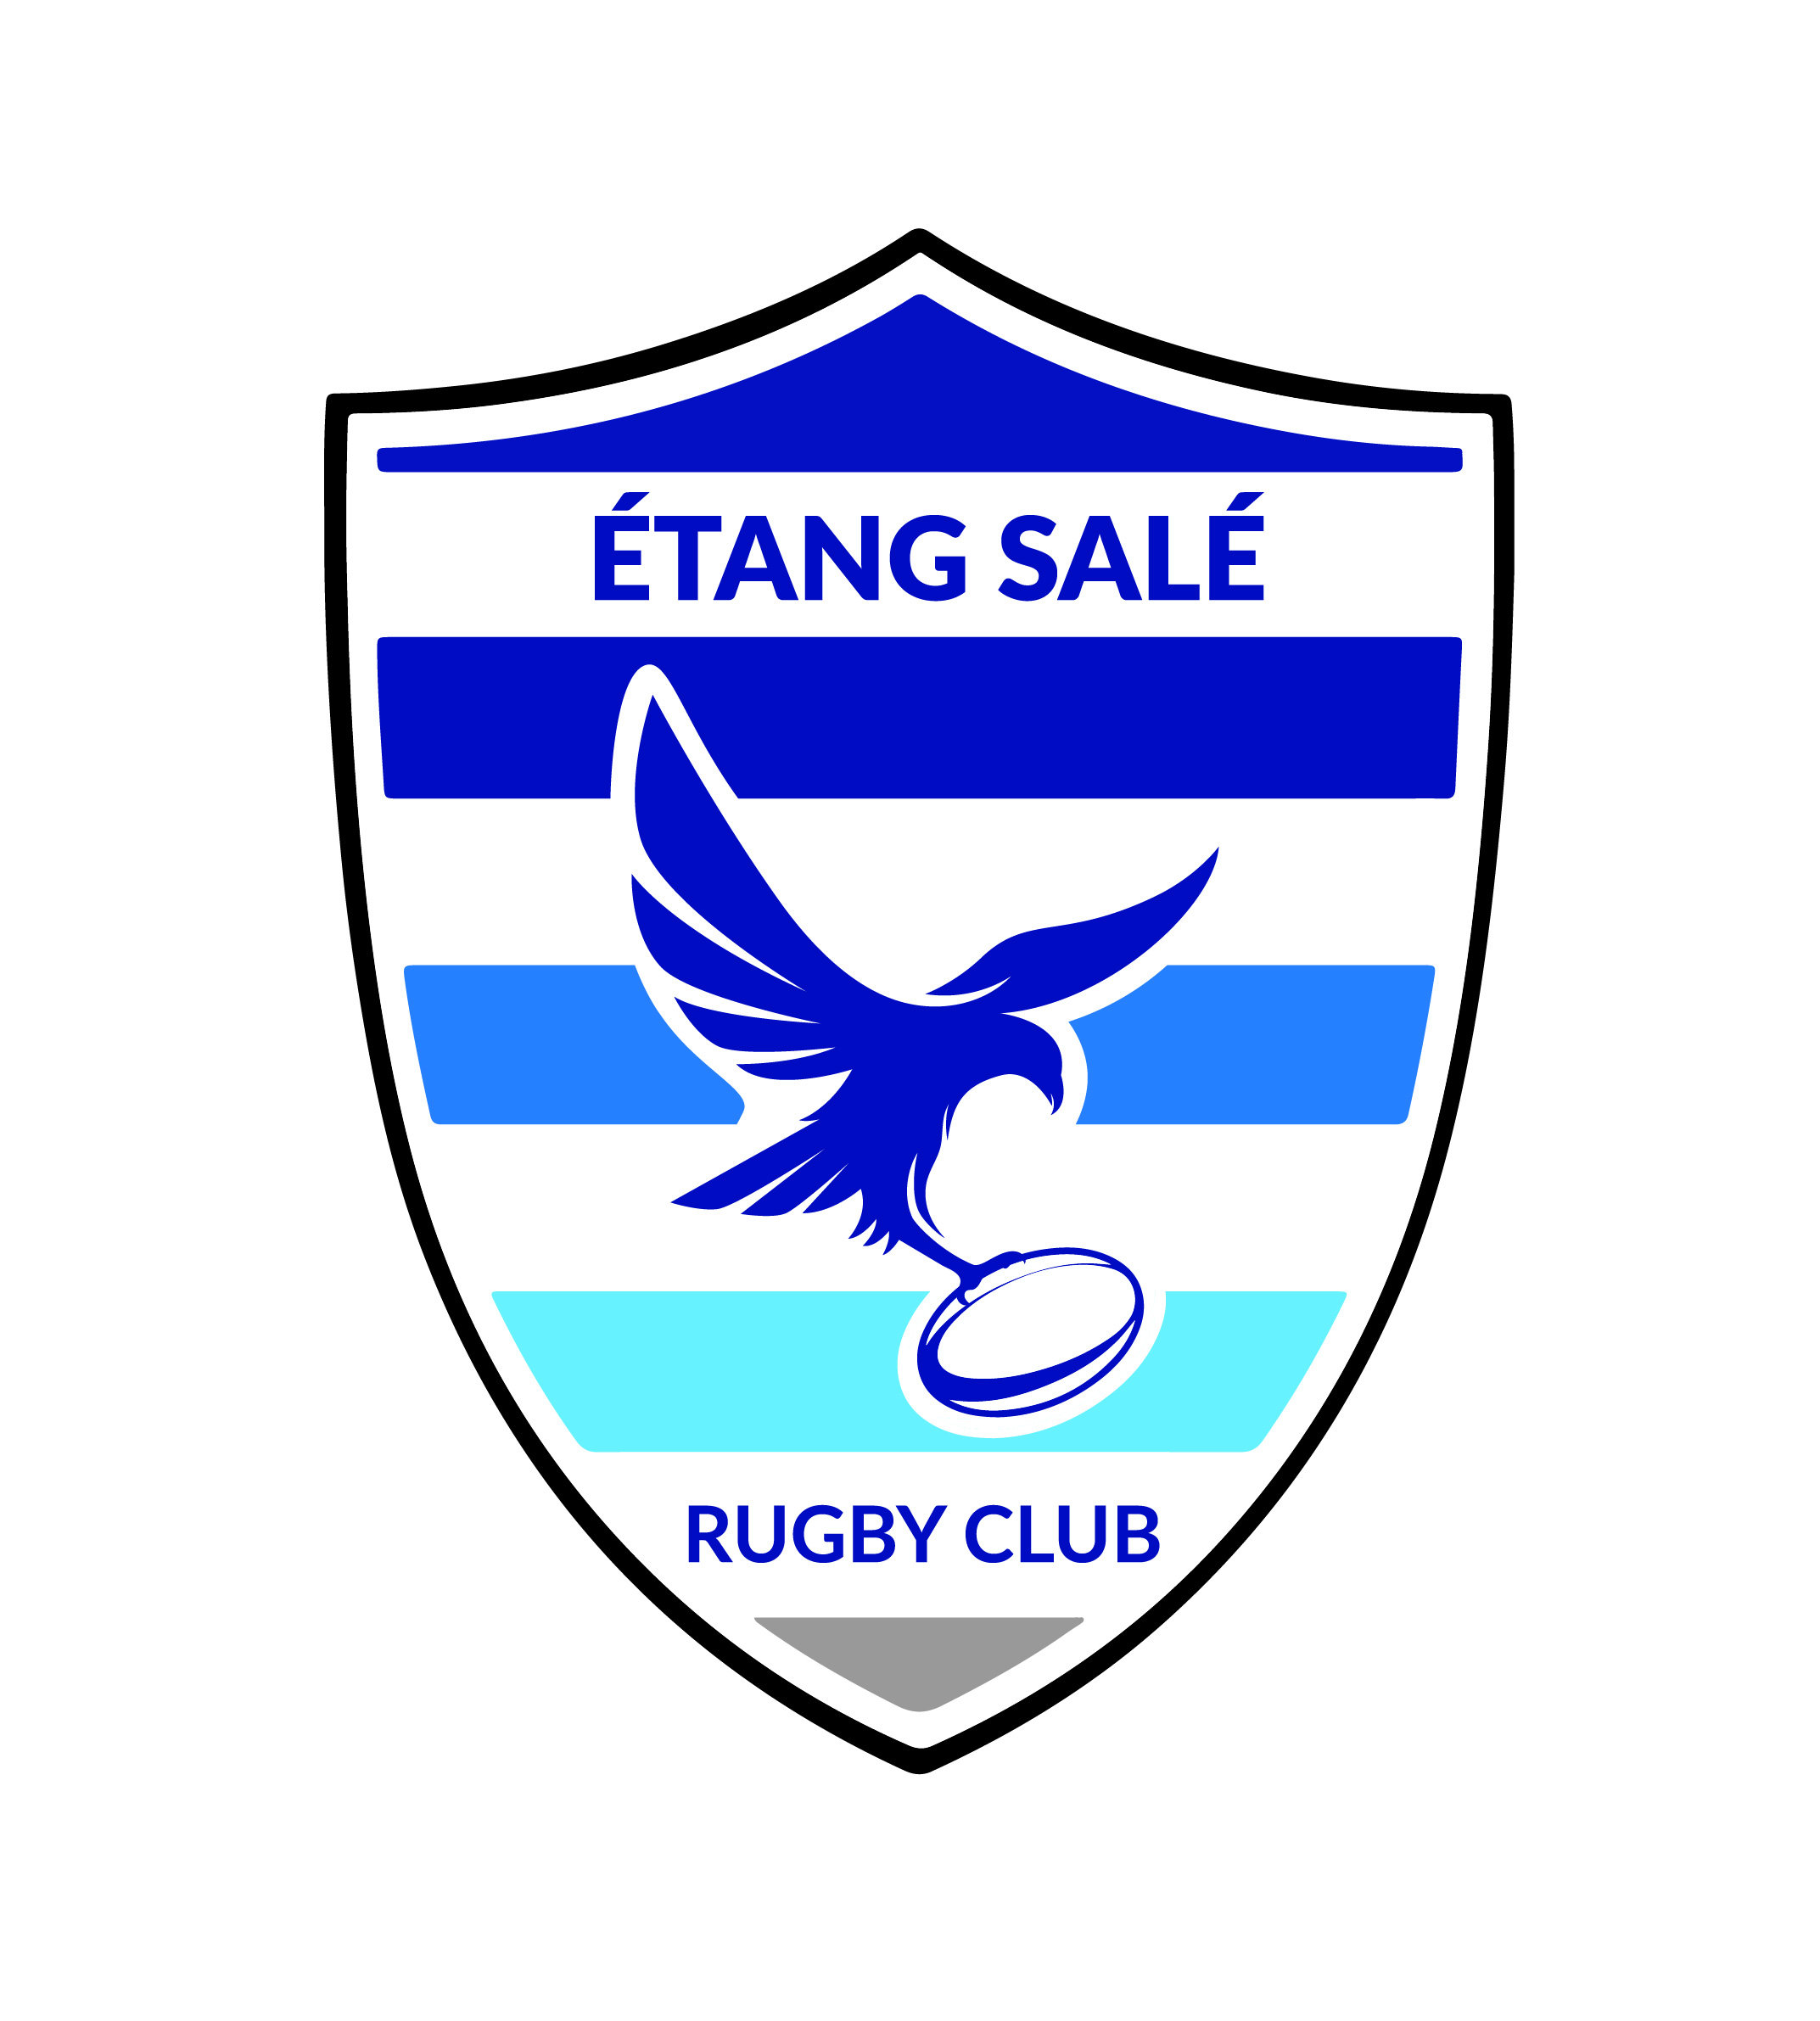 tang-sale-rugby-club-logo-jpg-620b85e057b03553838097.jpg